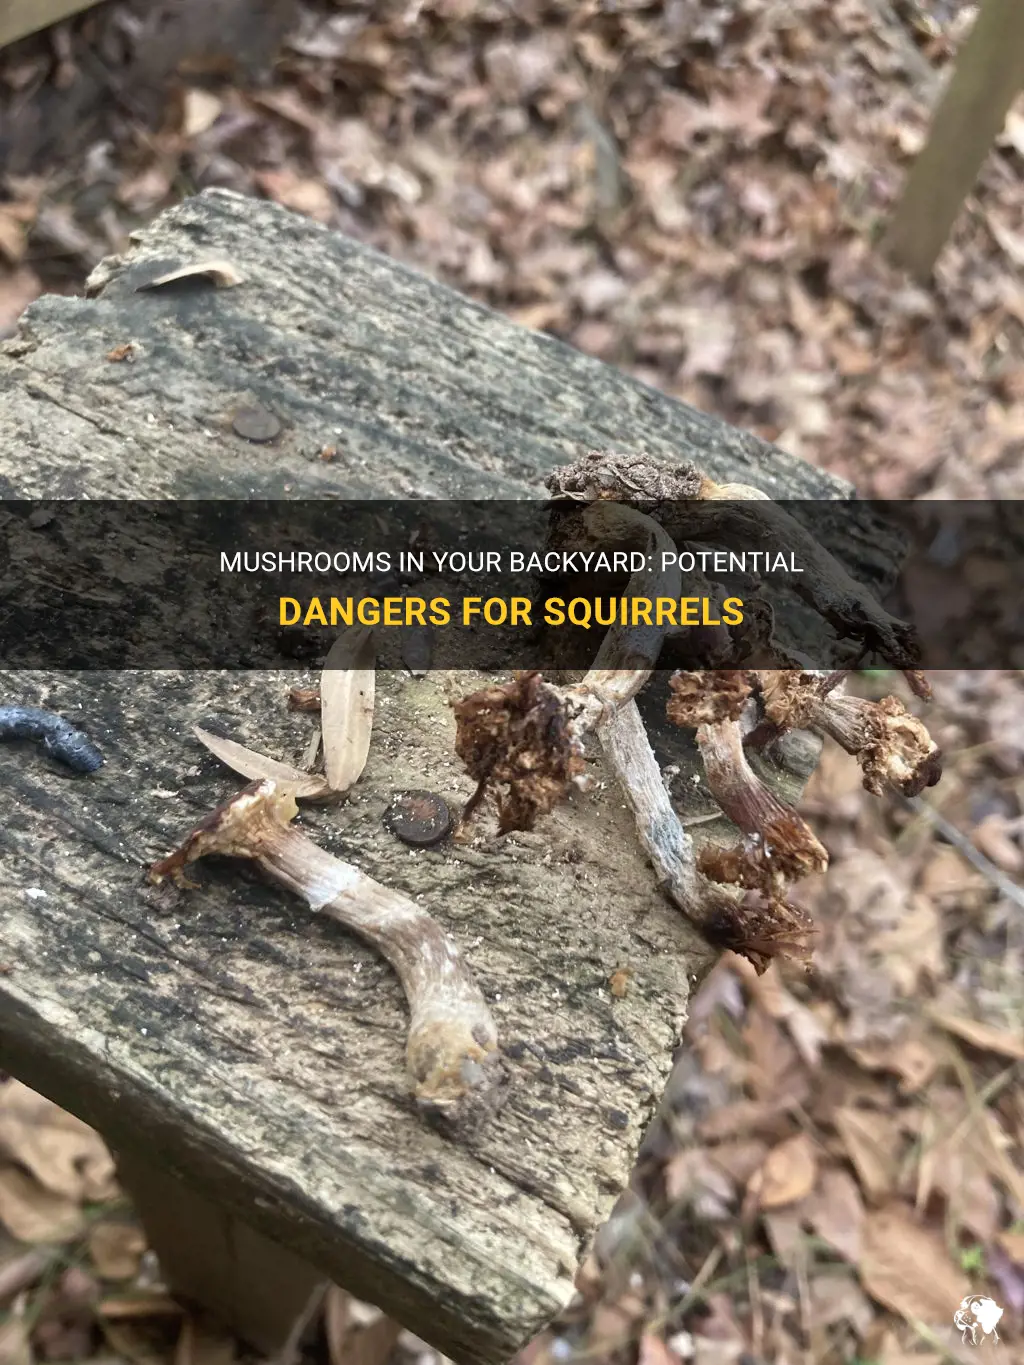 can mushrooms in backyard kill squirrels